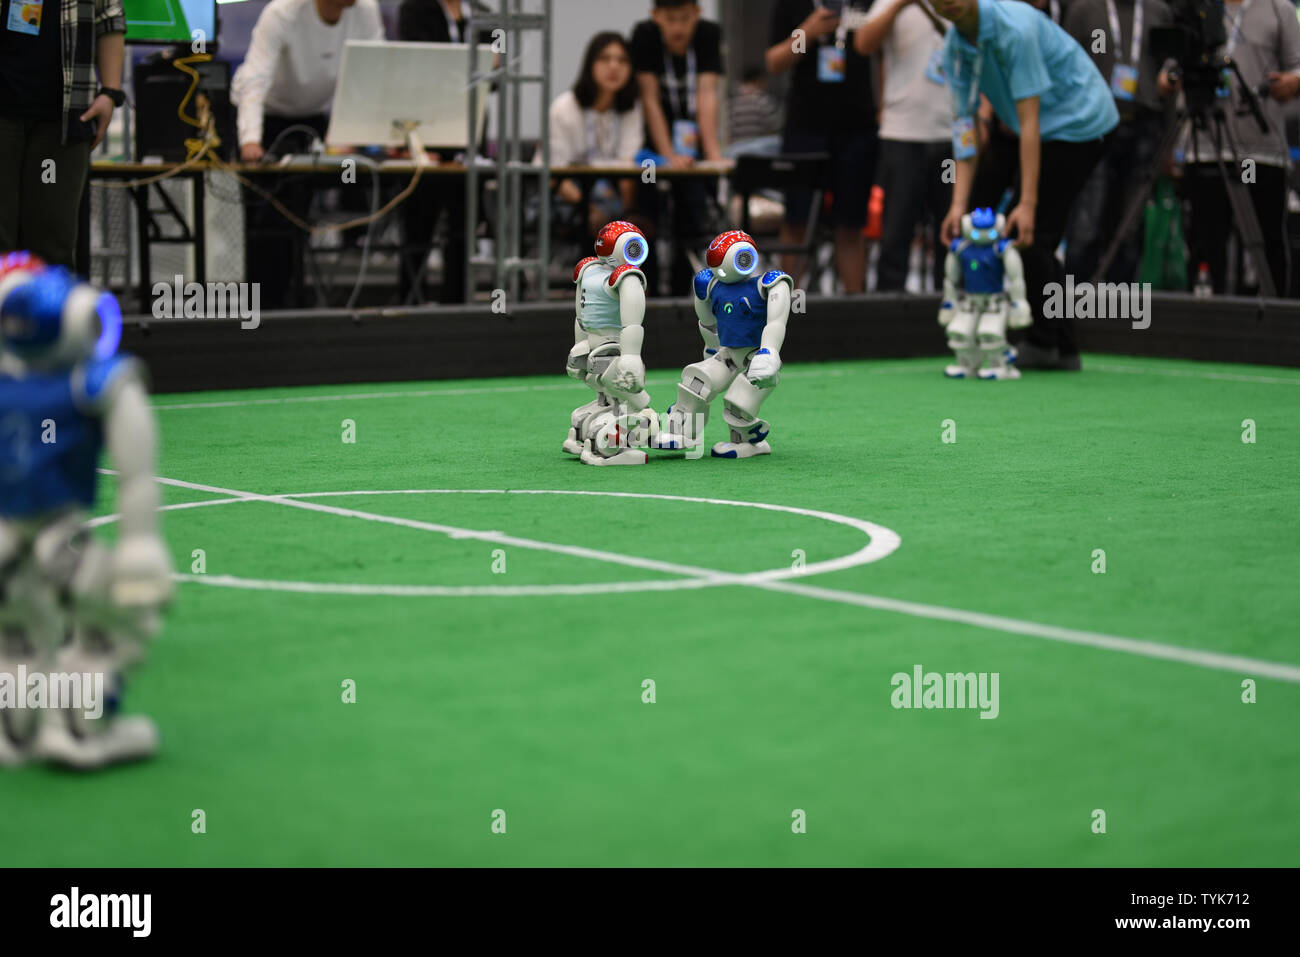 2019 Robot World Cup China Saikeqiao Shaoxing Robot Bionic Man Football Match News Stock Photo